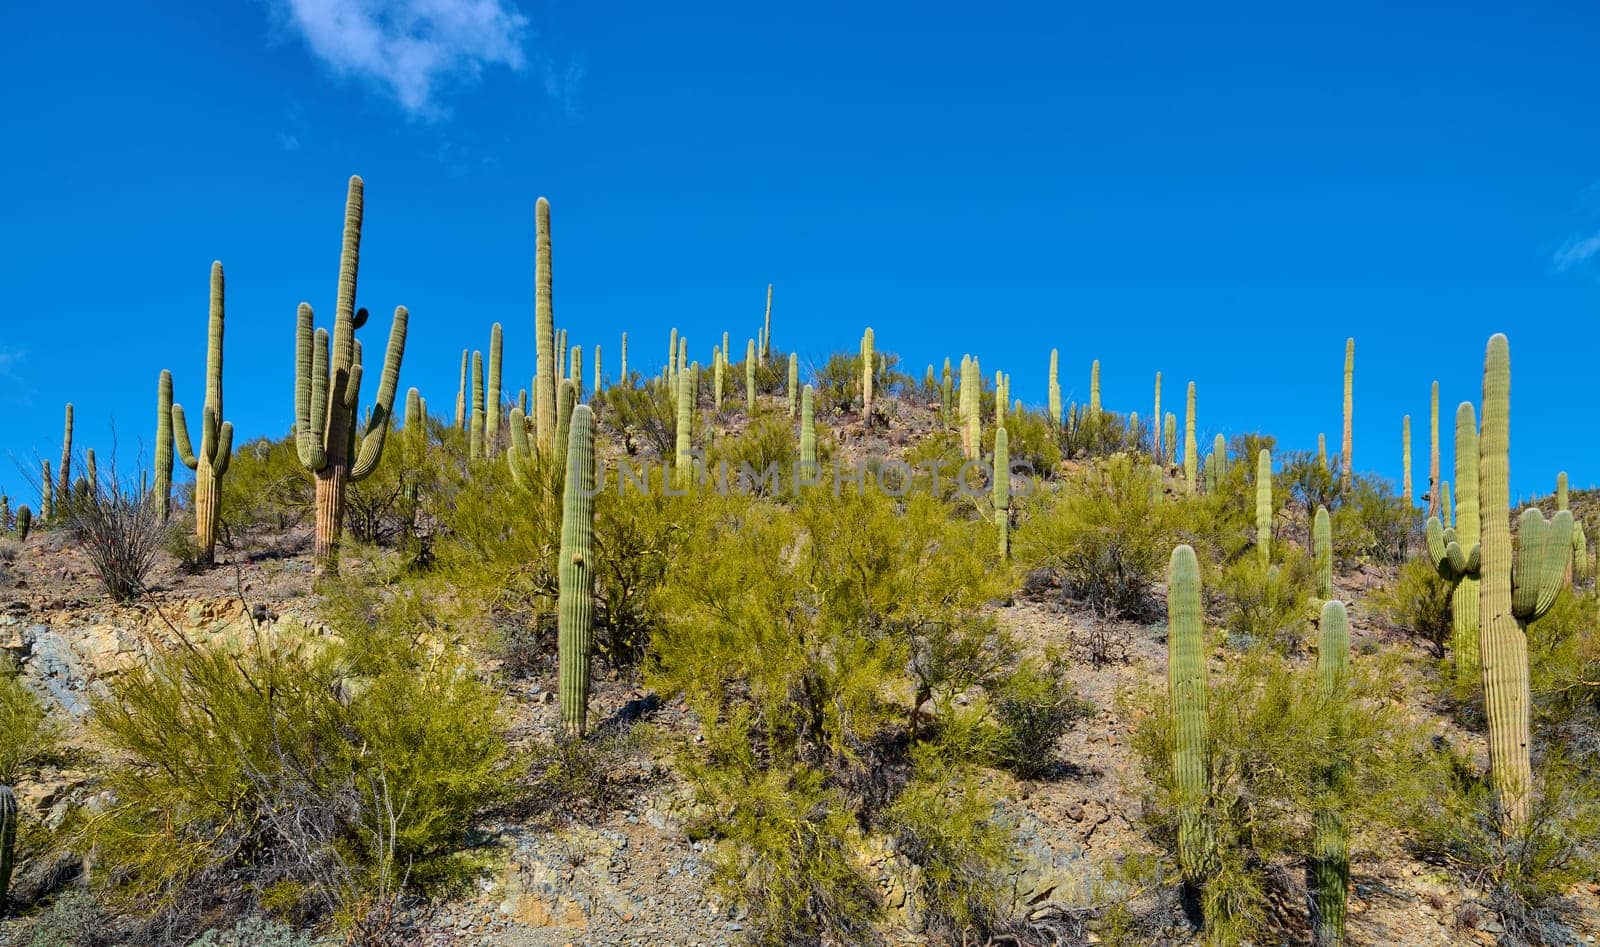 Saguaro cactues growing along King Canyon Wash in Saguaro National Park, Tucson Arizona.